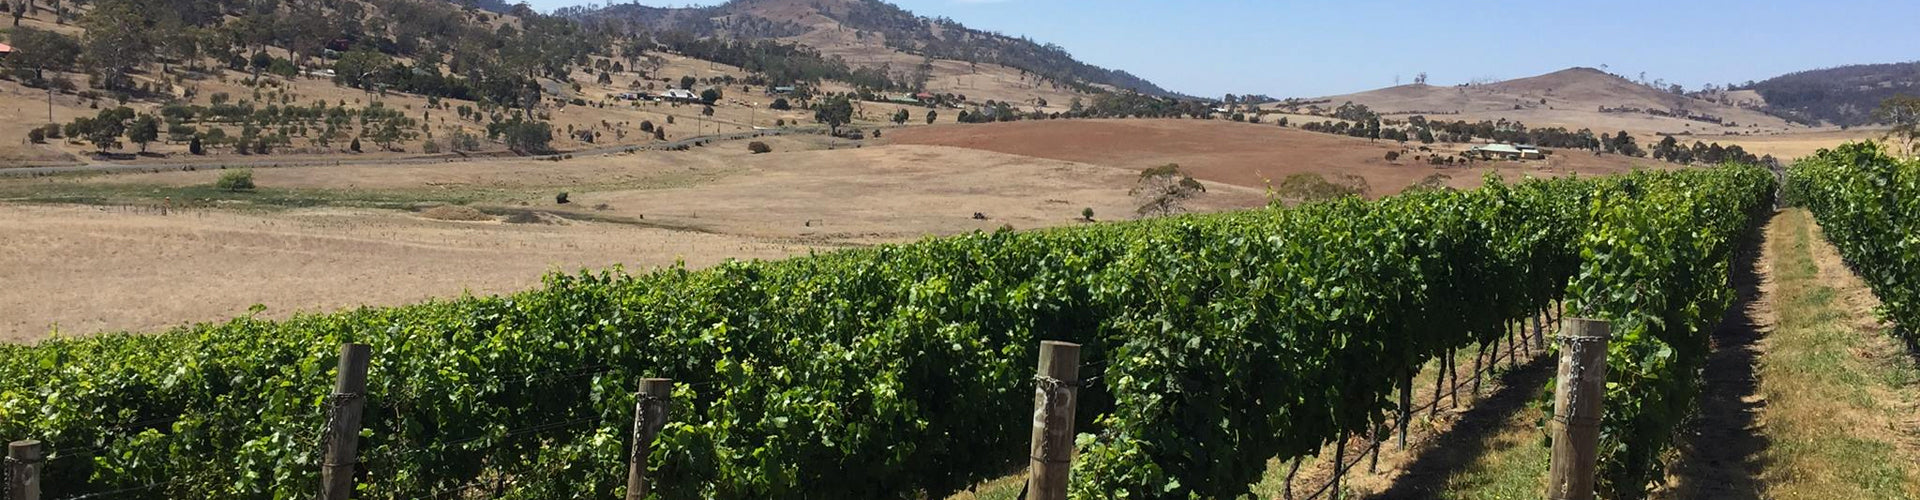 Stargazaer Vineyards in Tasmania